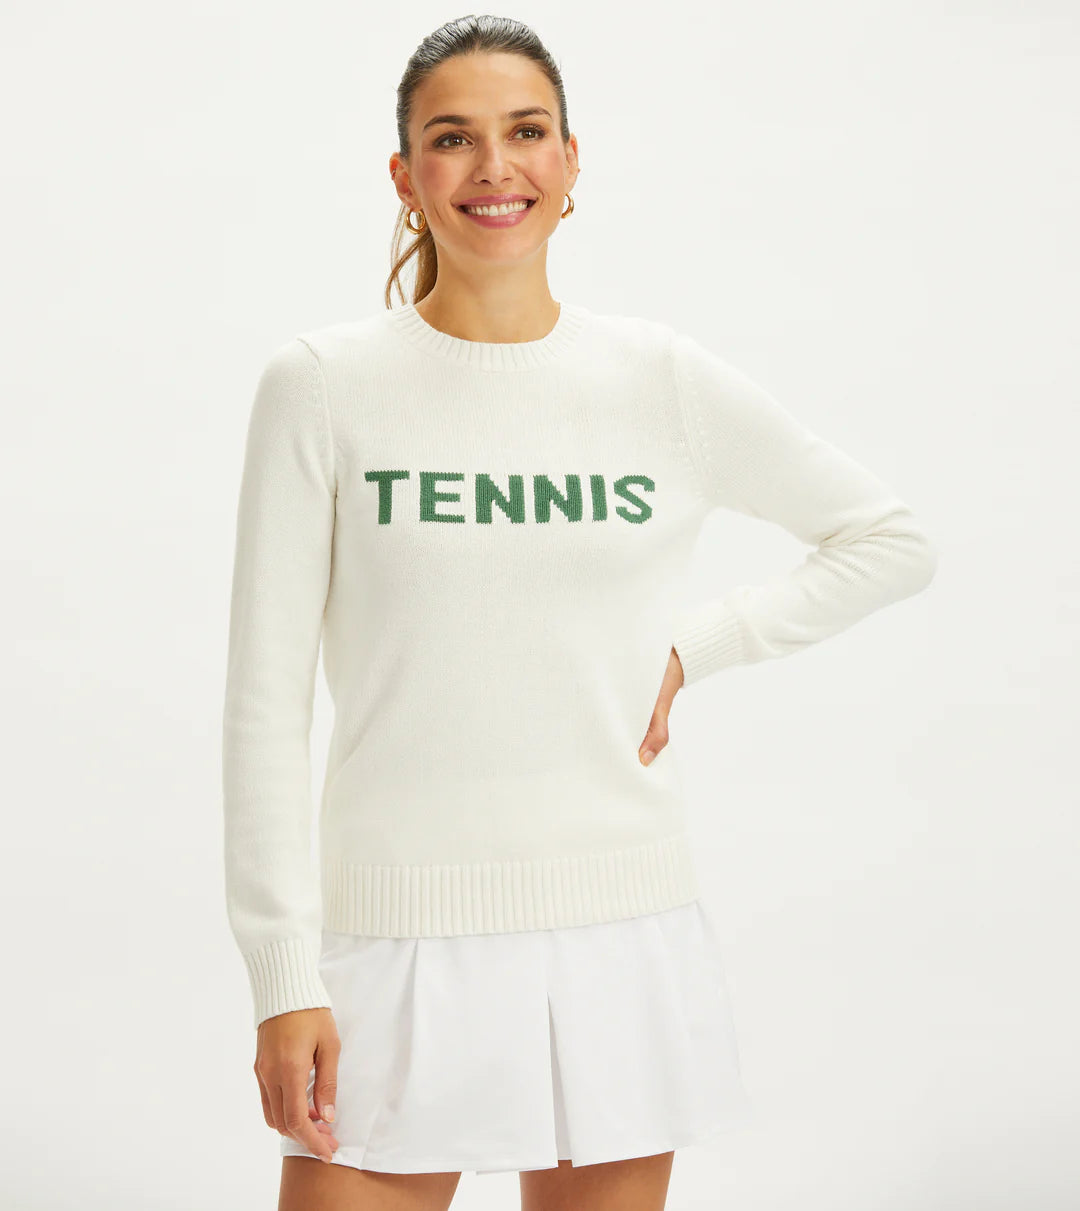 Tennis Sweater - Ivory/Green